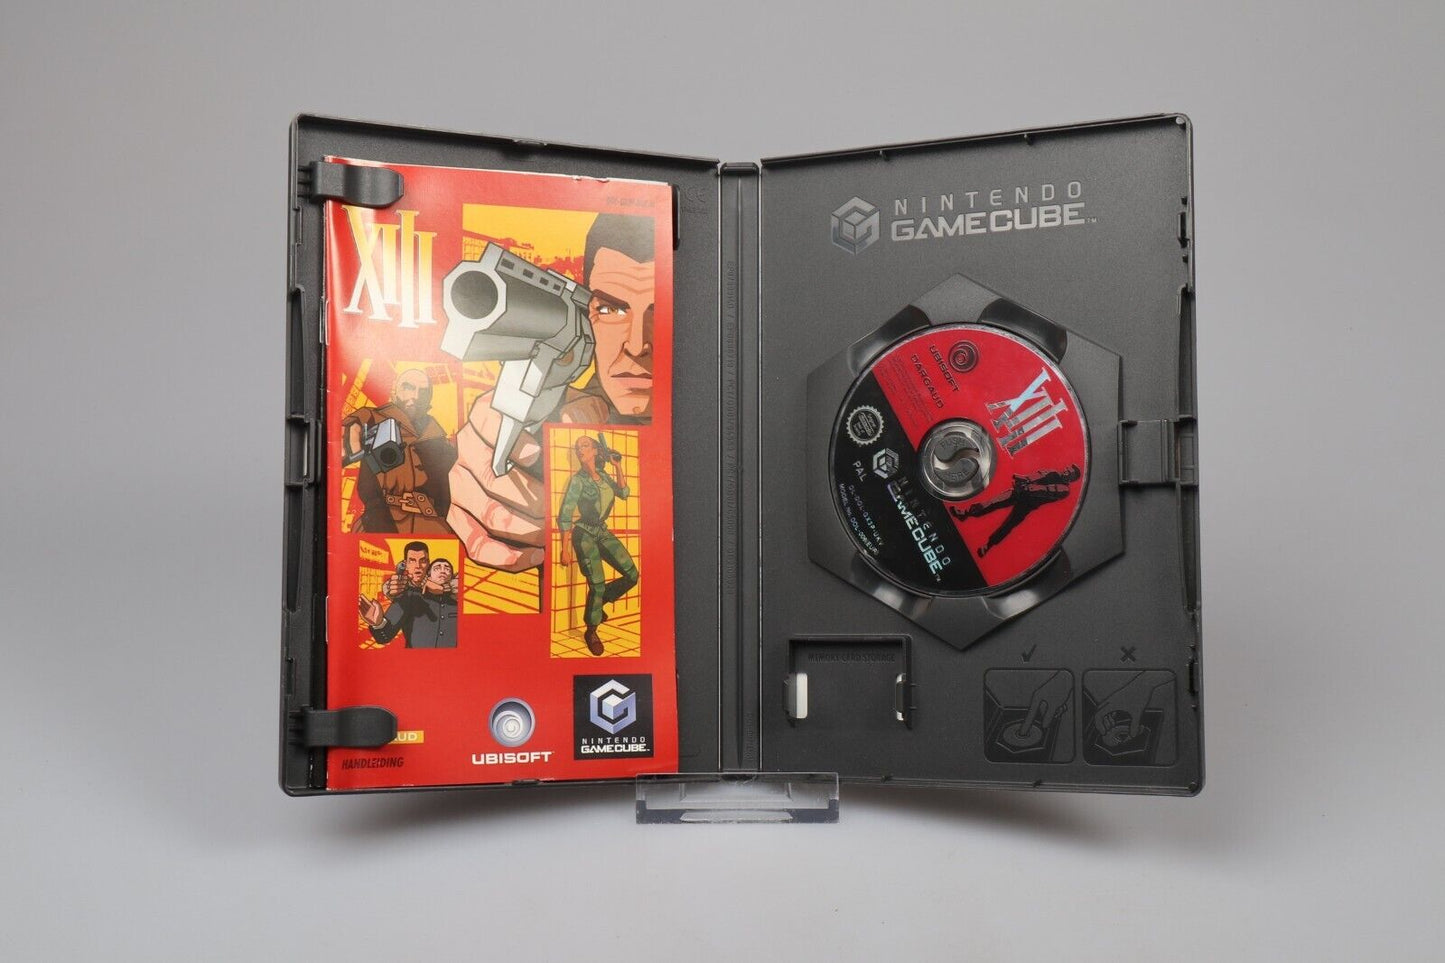 GameCube | XIII (PAL) (HOL)